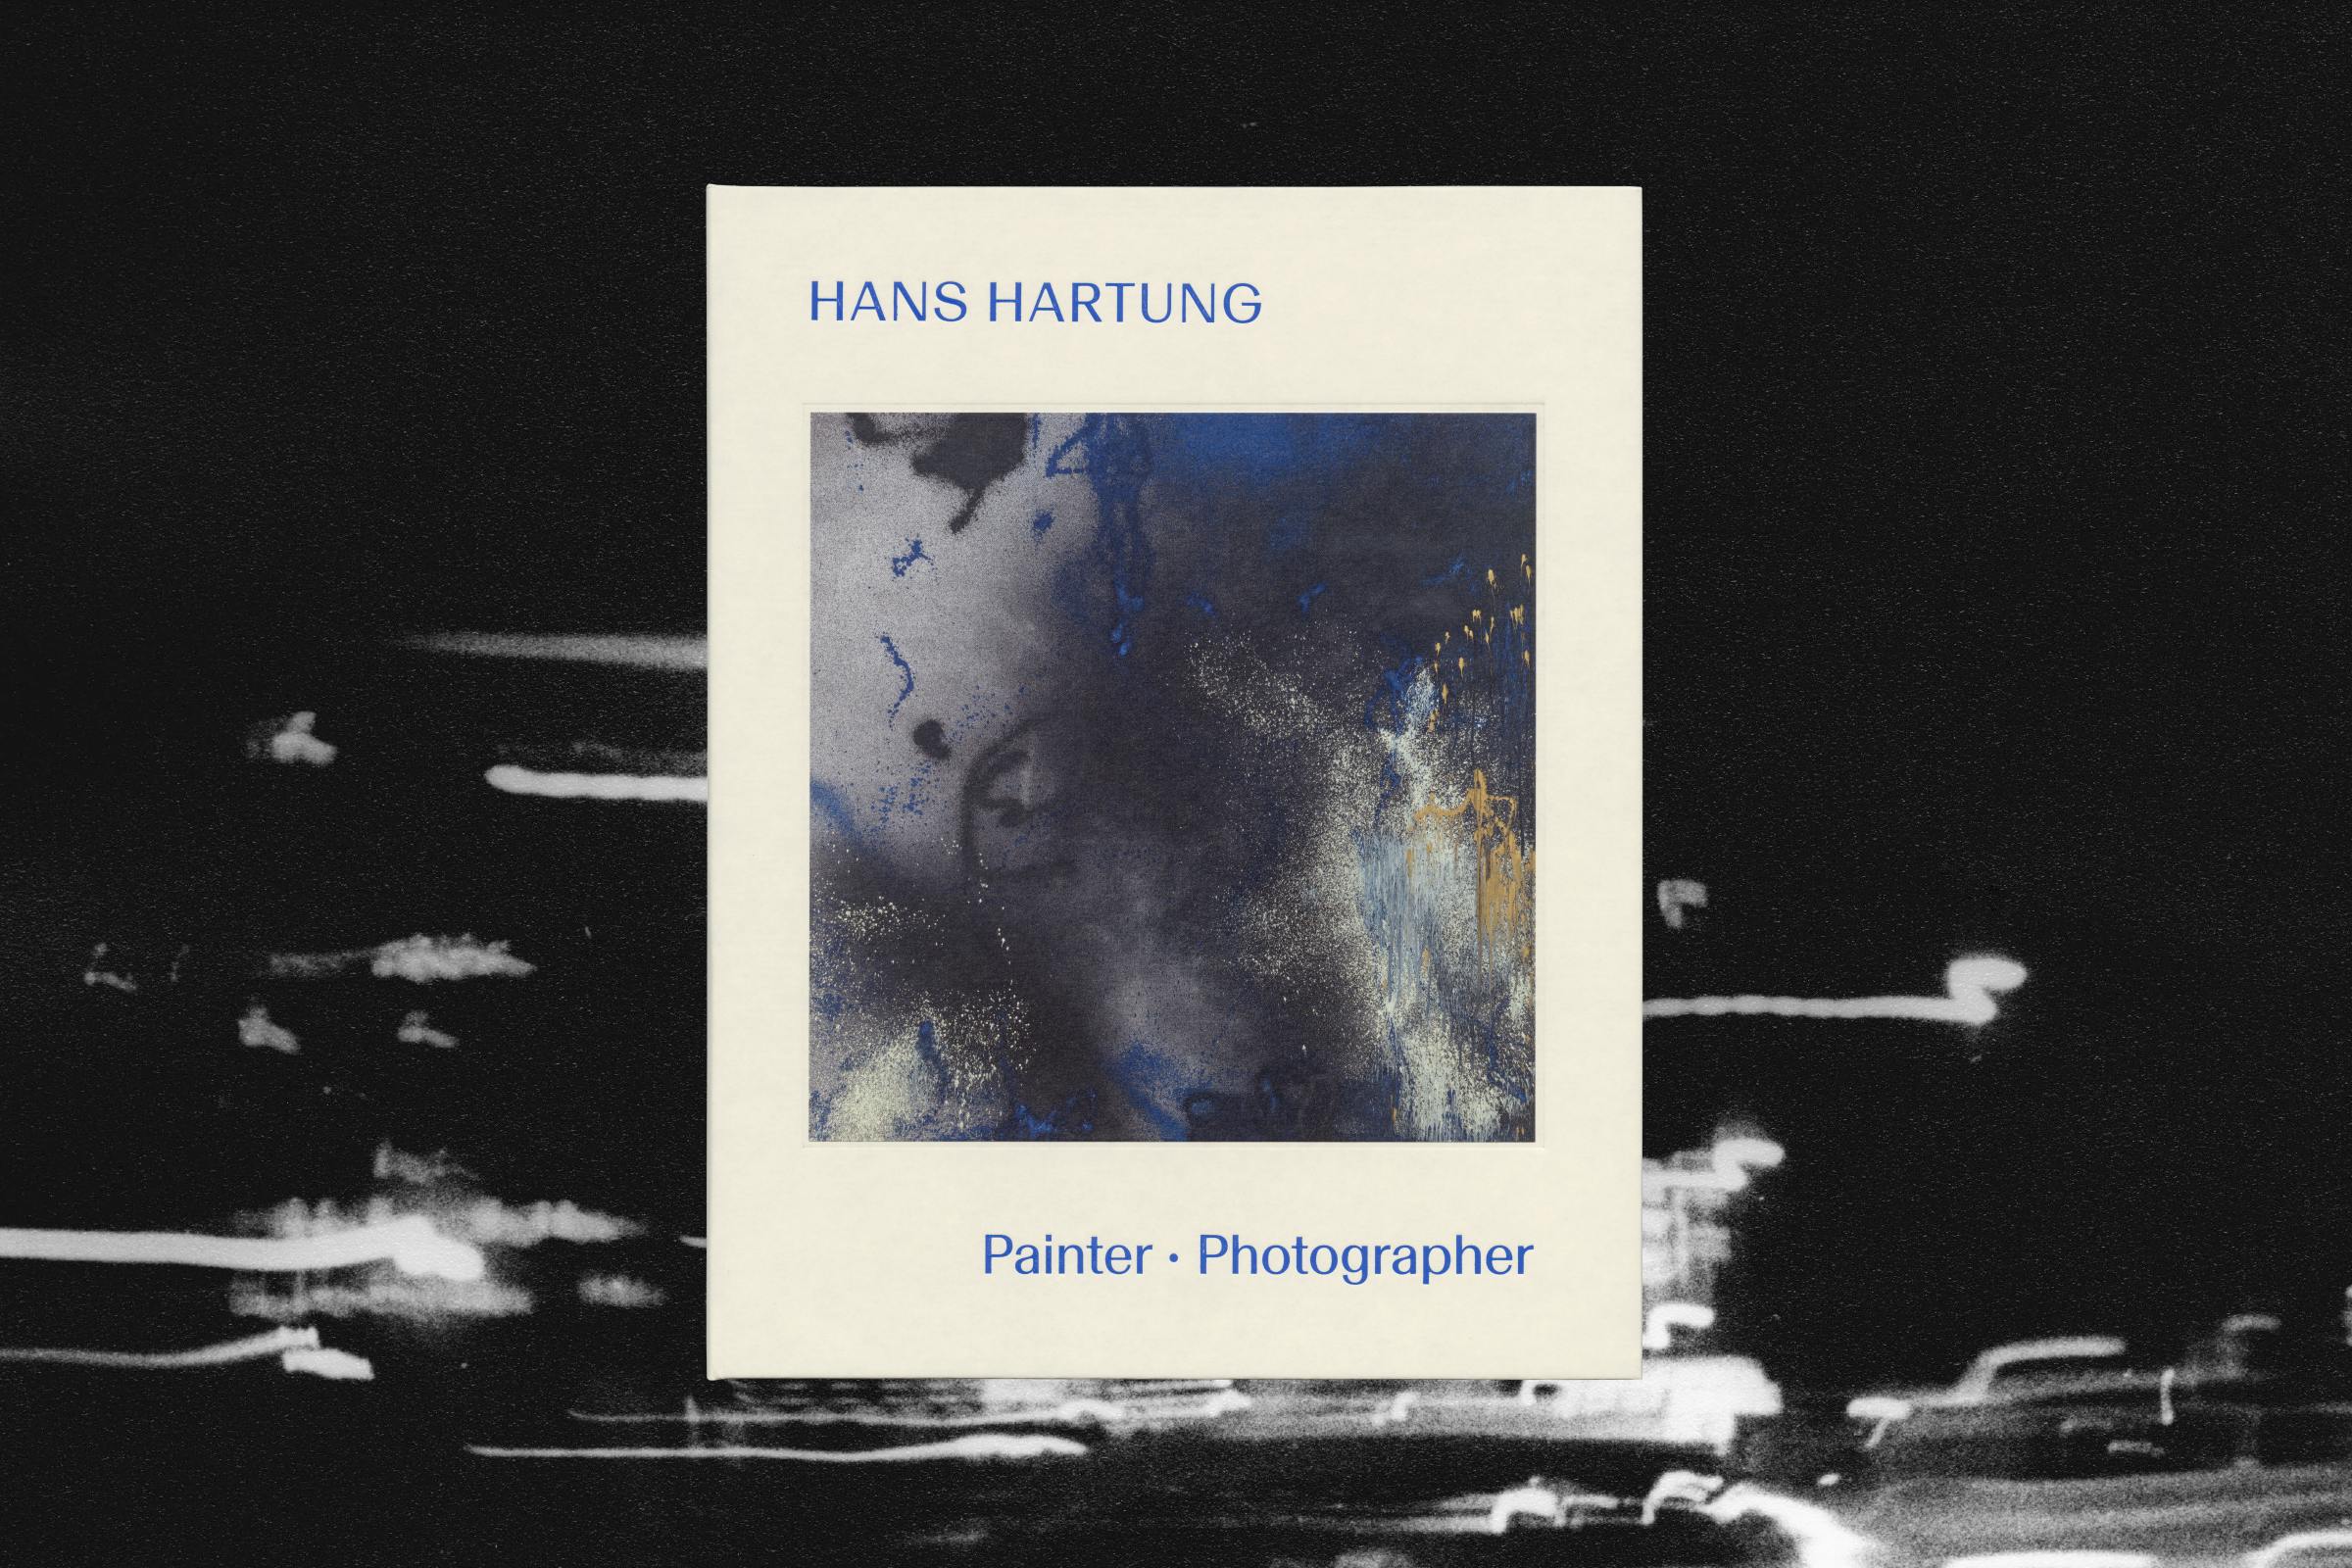 Waddington Custot, Hans Hartung: Painter • Photographer. Graphic Design by Wolfe Hall